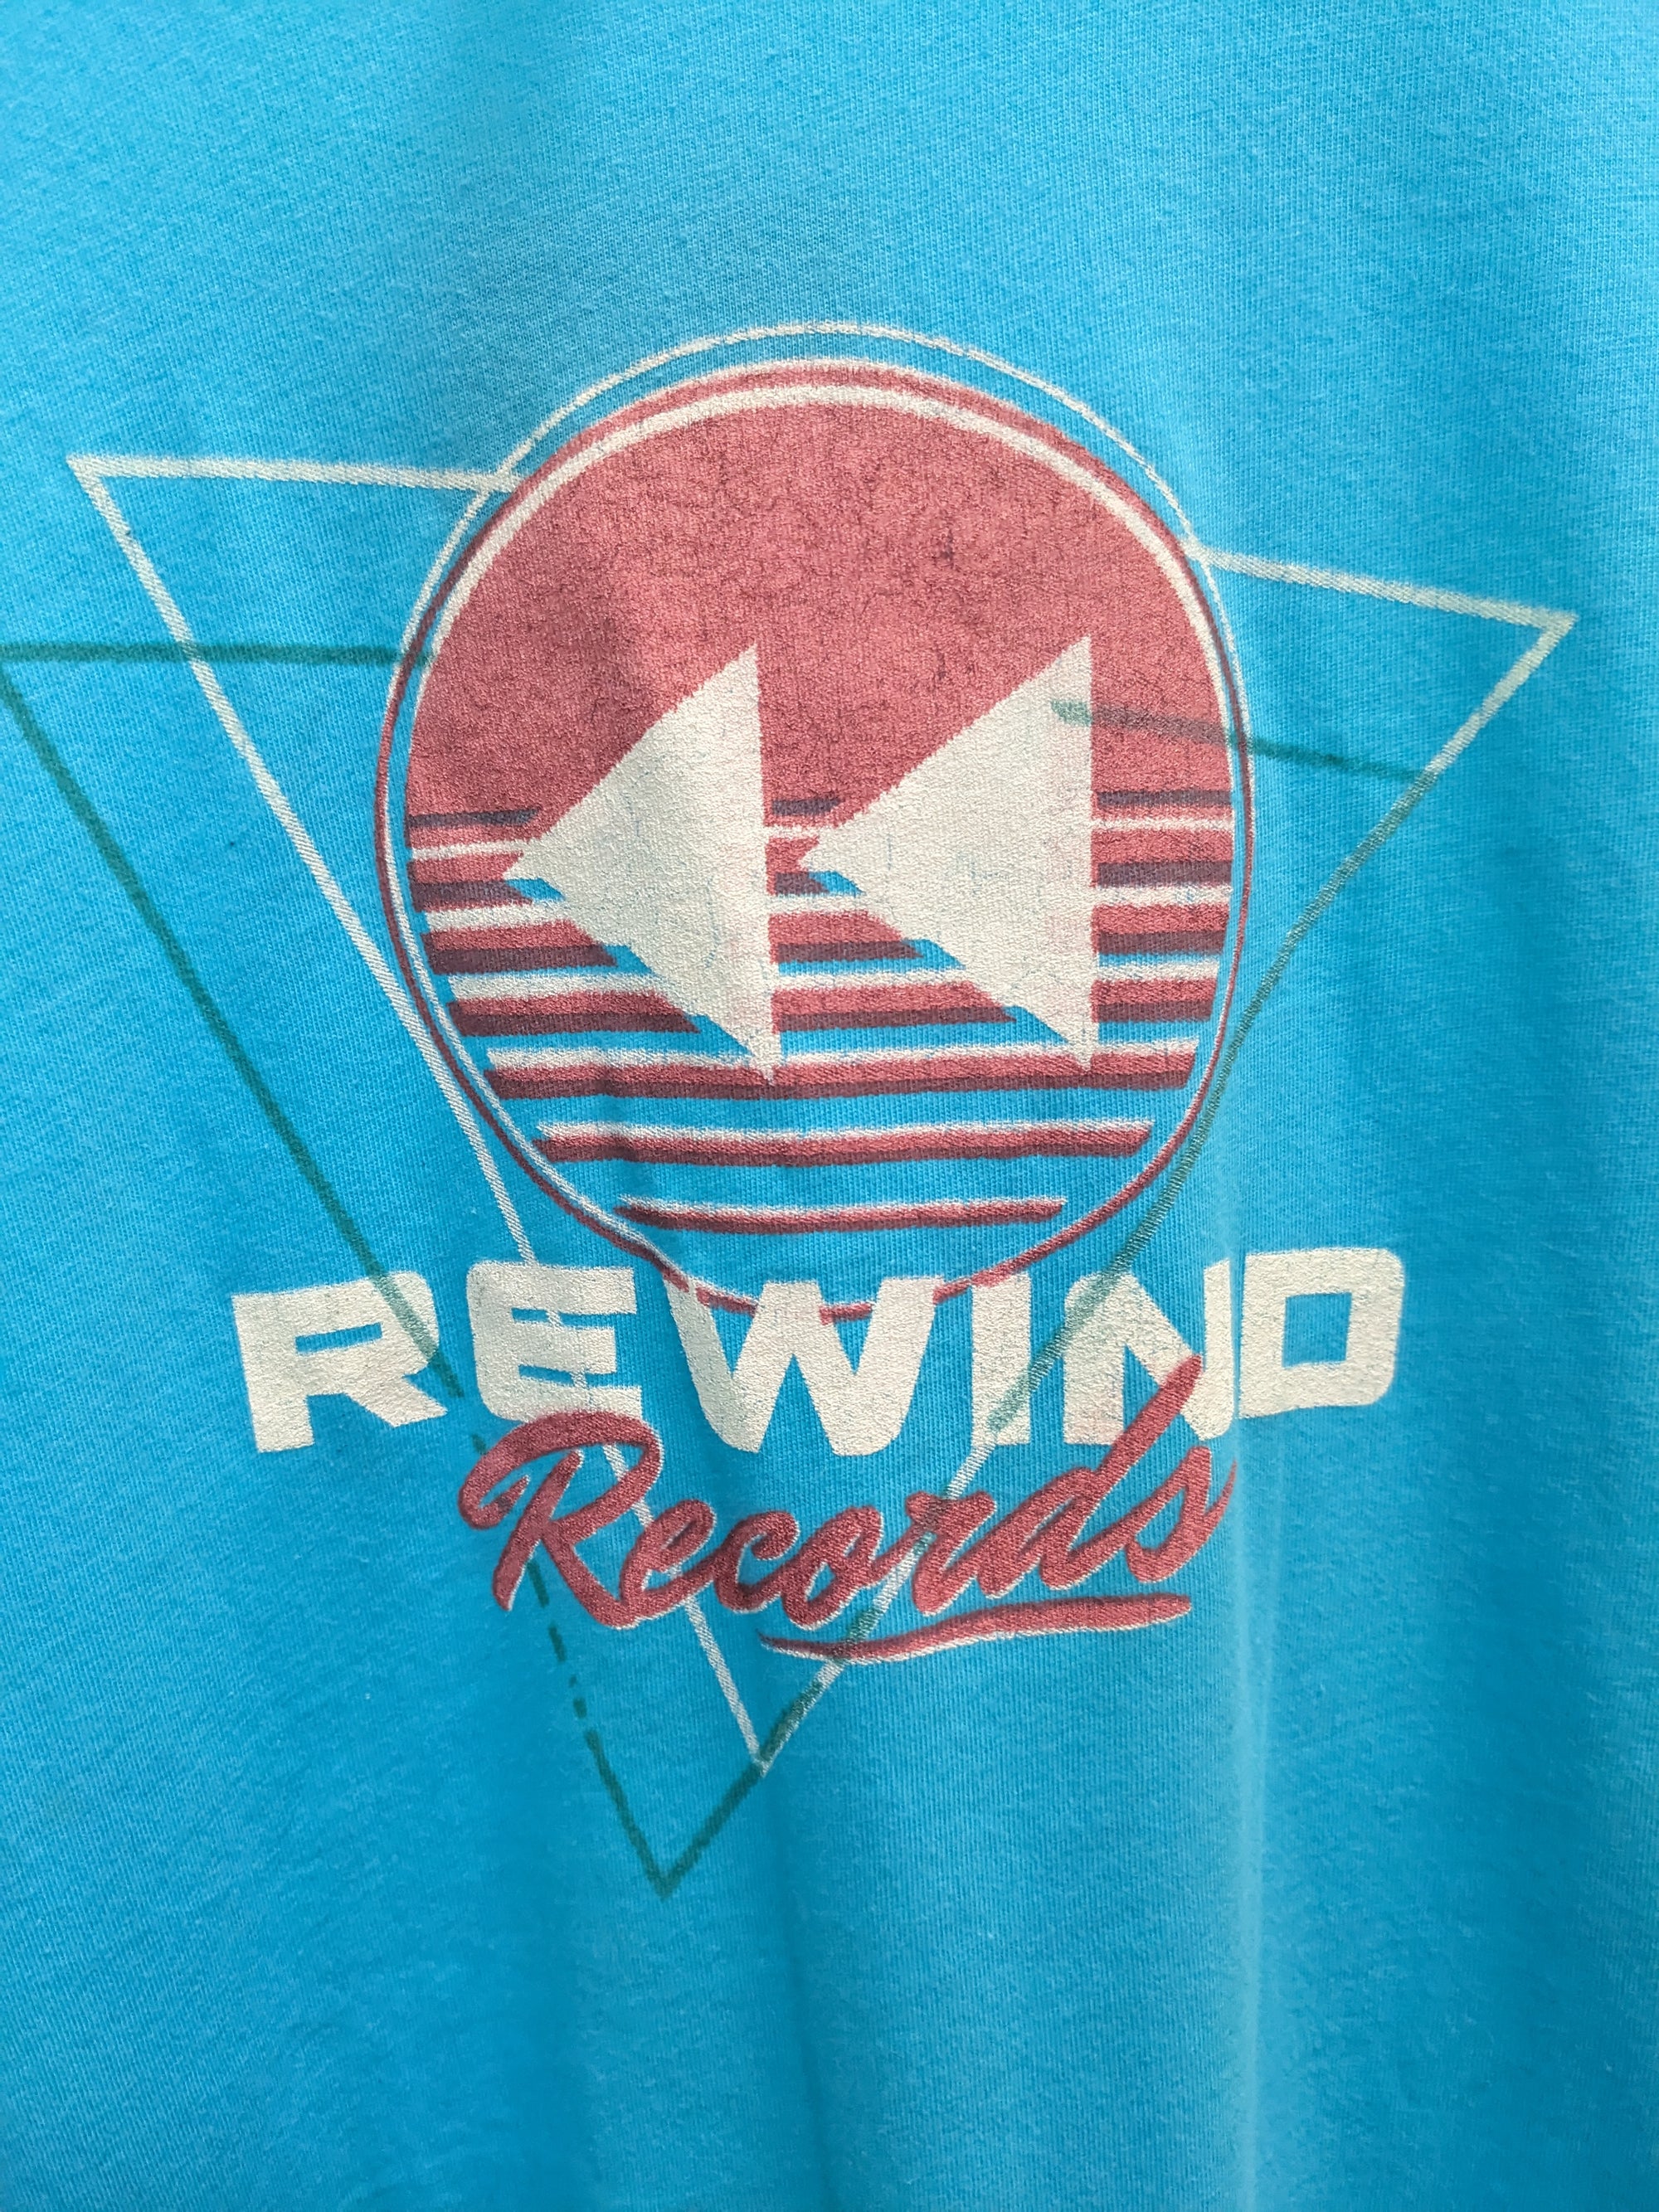 Rewind Records Misprint - Large